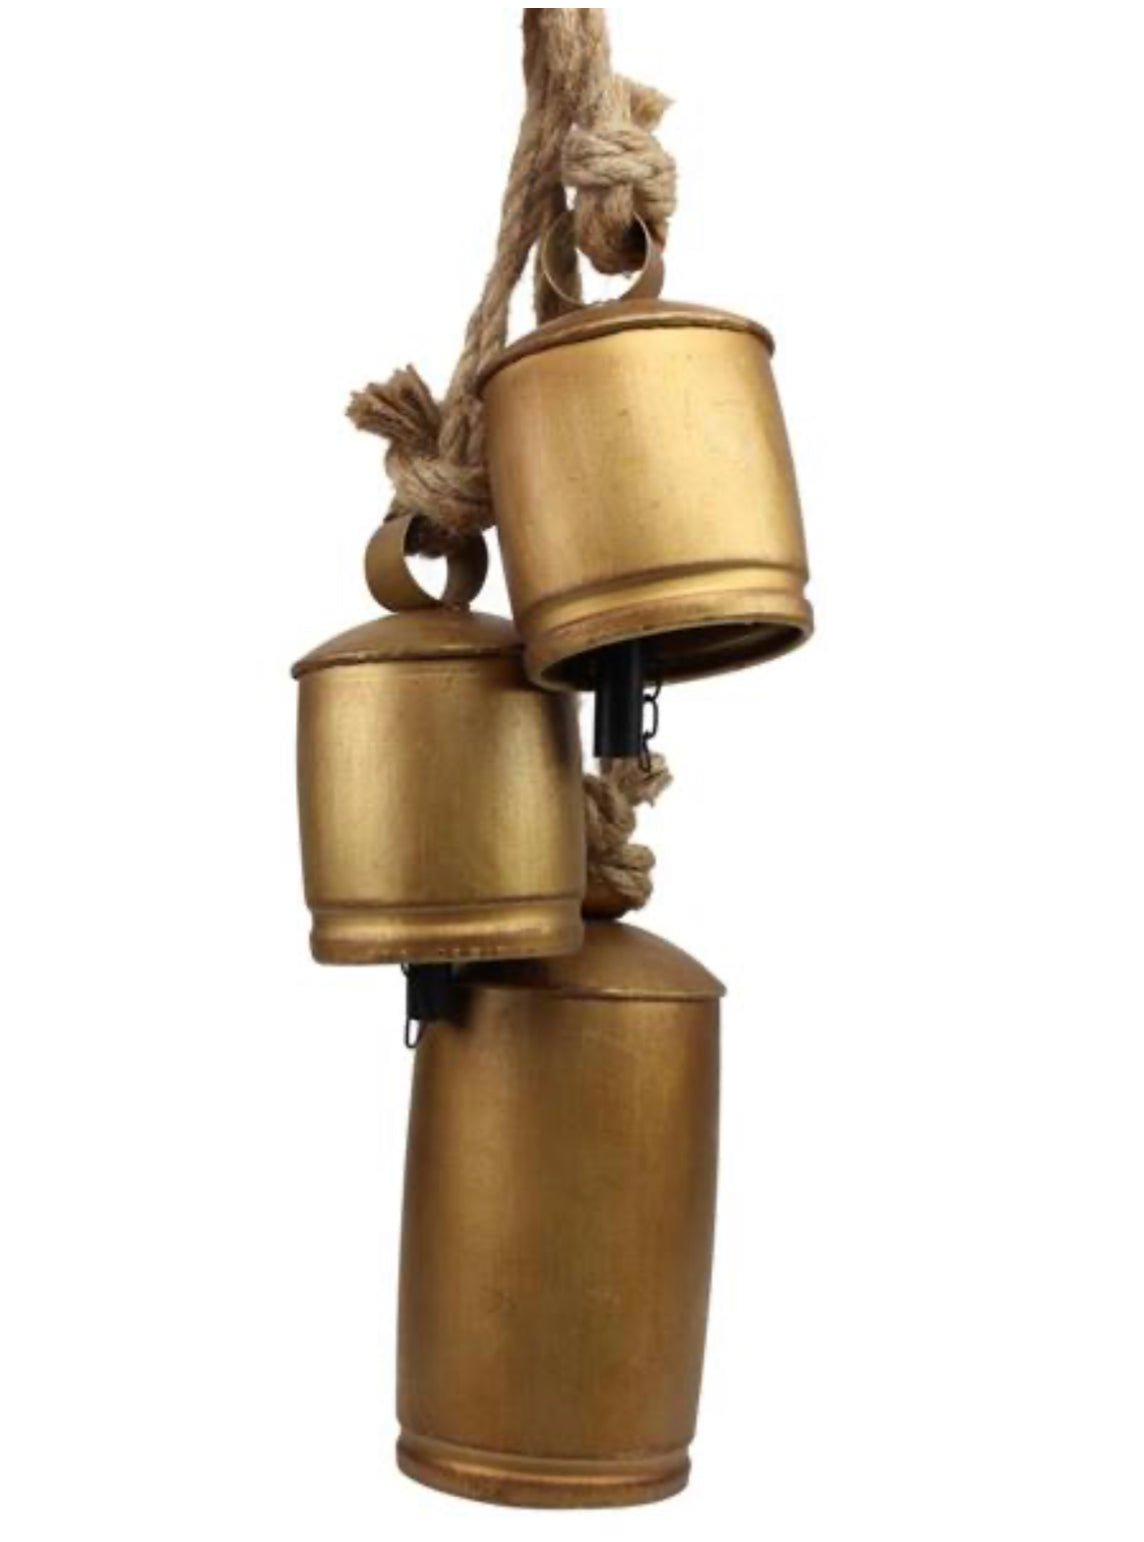 3 tier tin Gold vintage bells cluster - Greenery MarketSeasonal & Holiday DecorationsKE2179